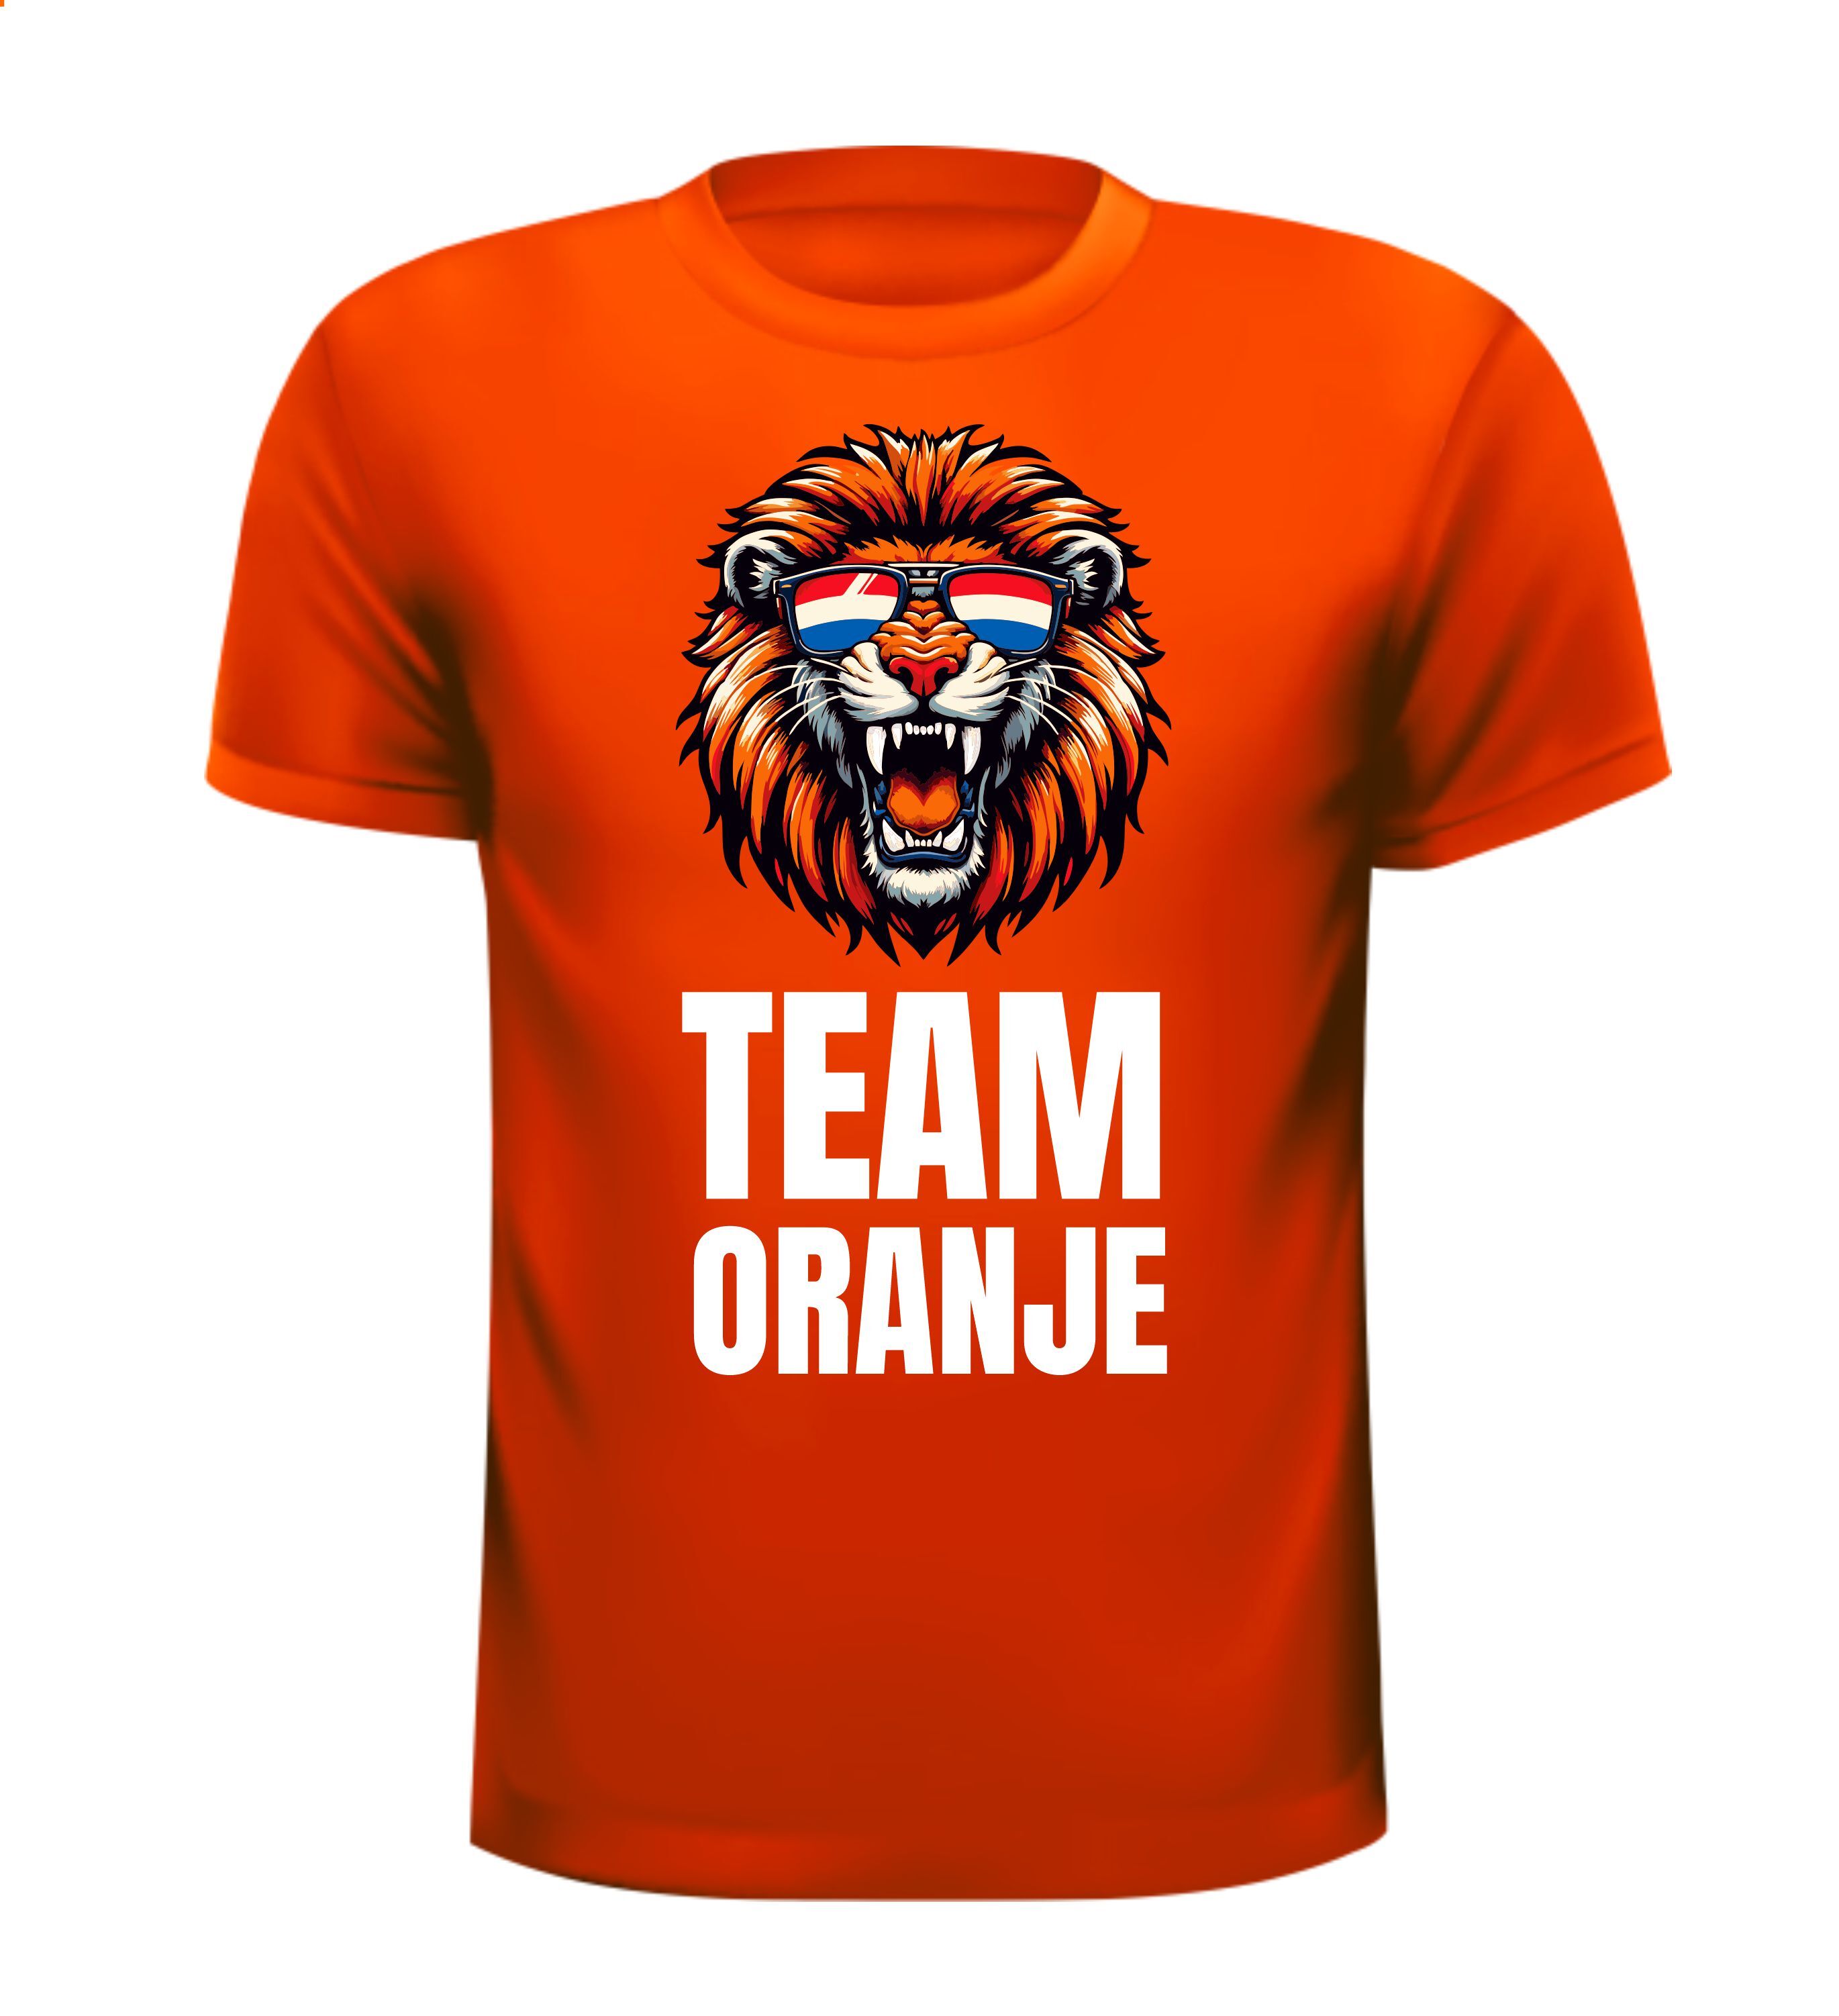 Team oranje T-shirt Voetballen EK WK